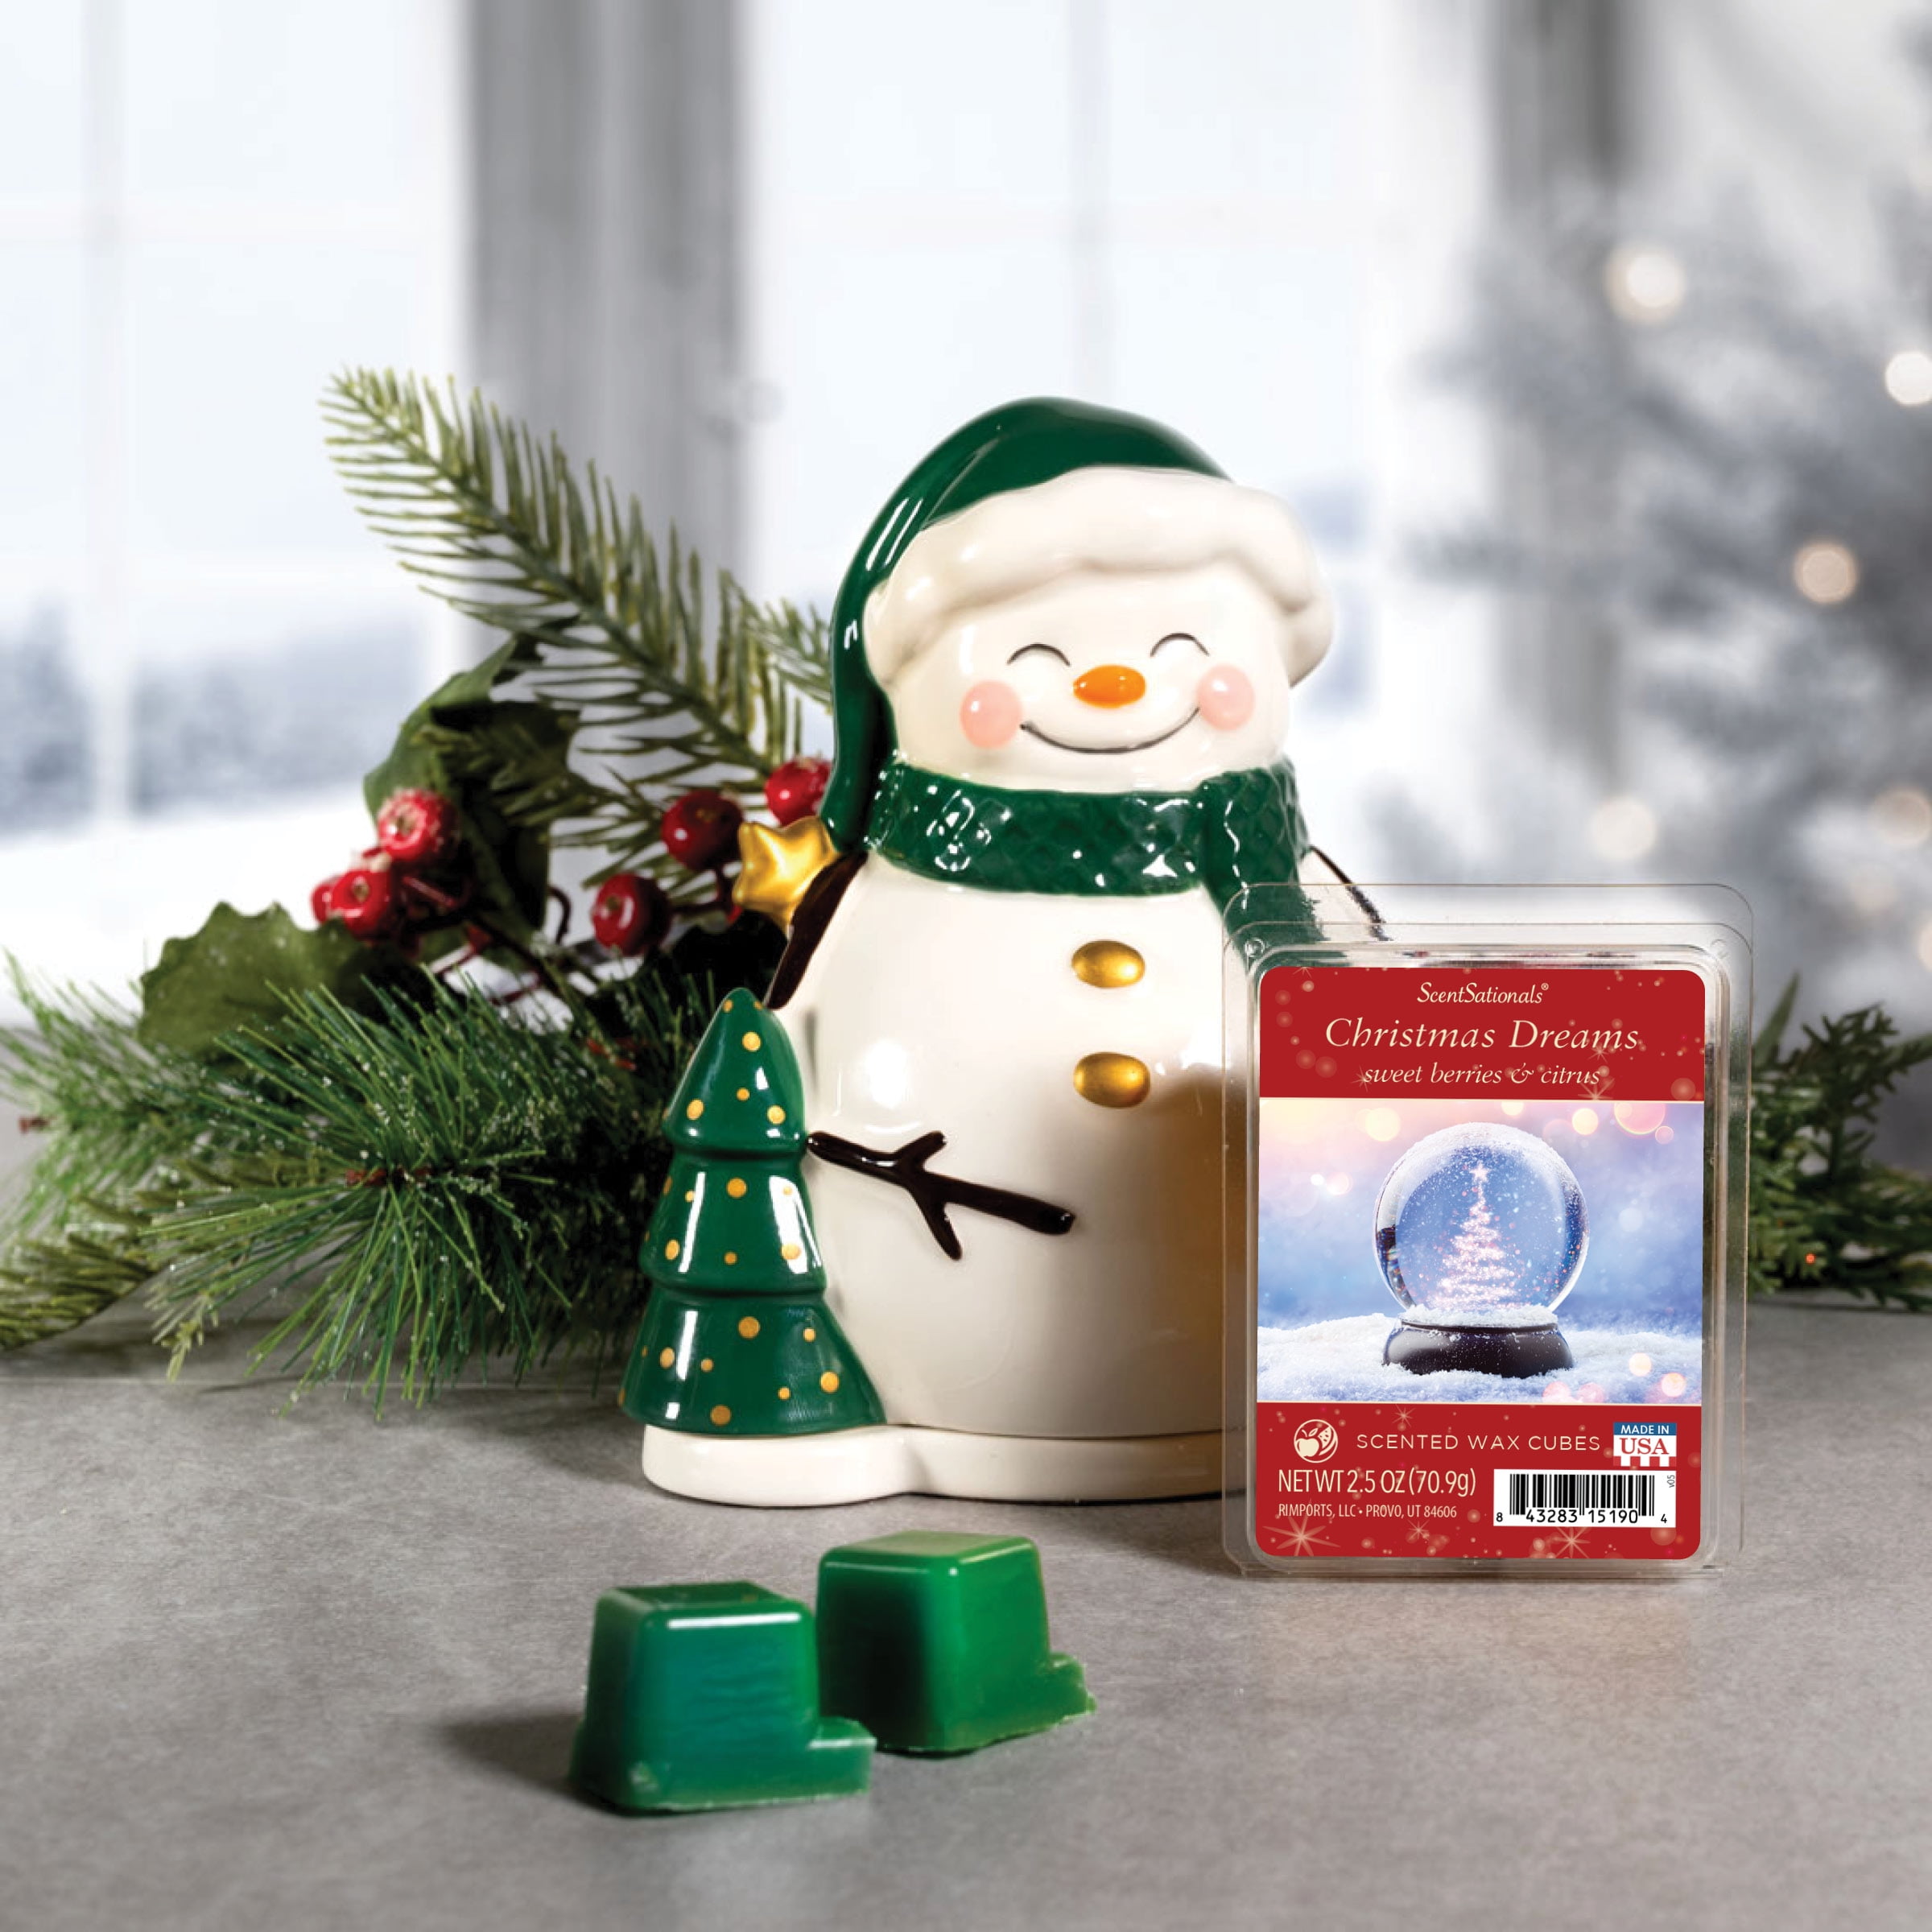 Pine Dreams - Christmas Friends - Wax Melts - 6 count - AHA!